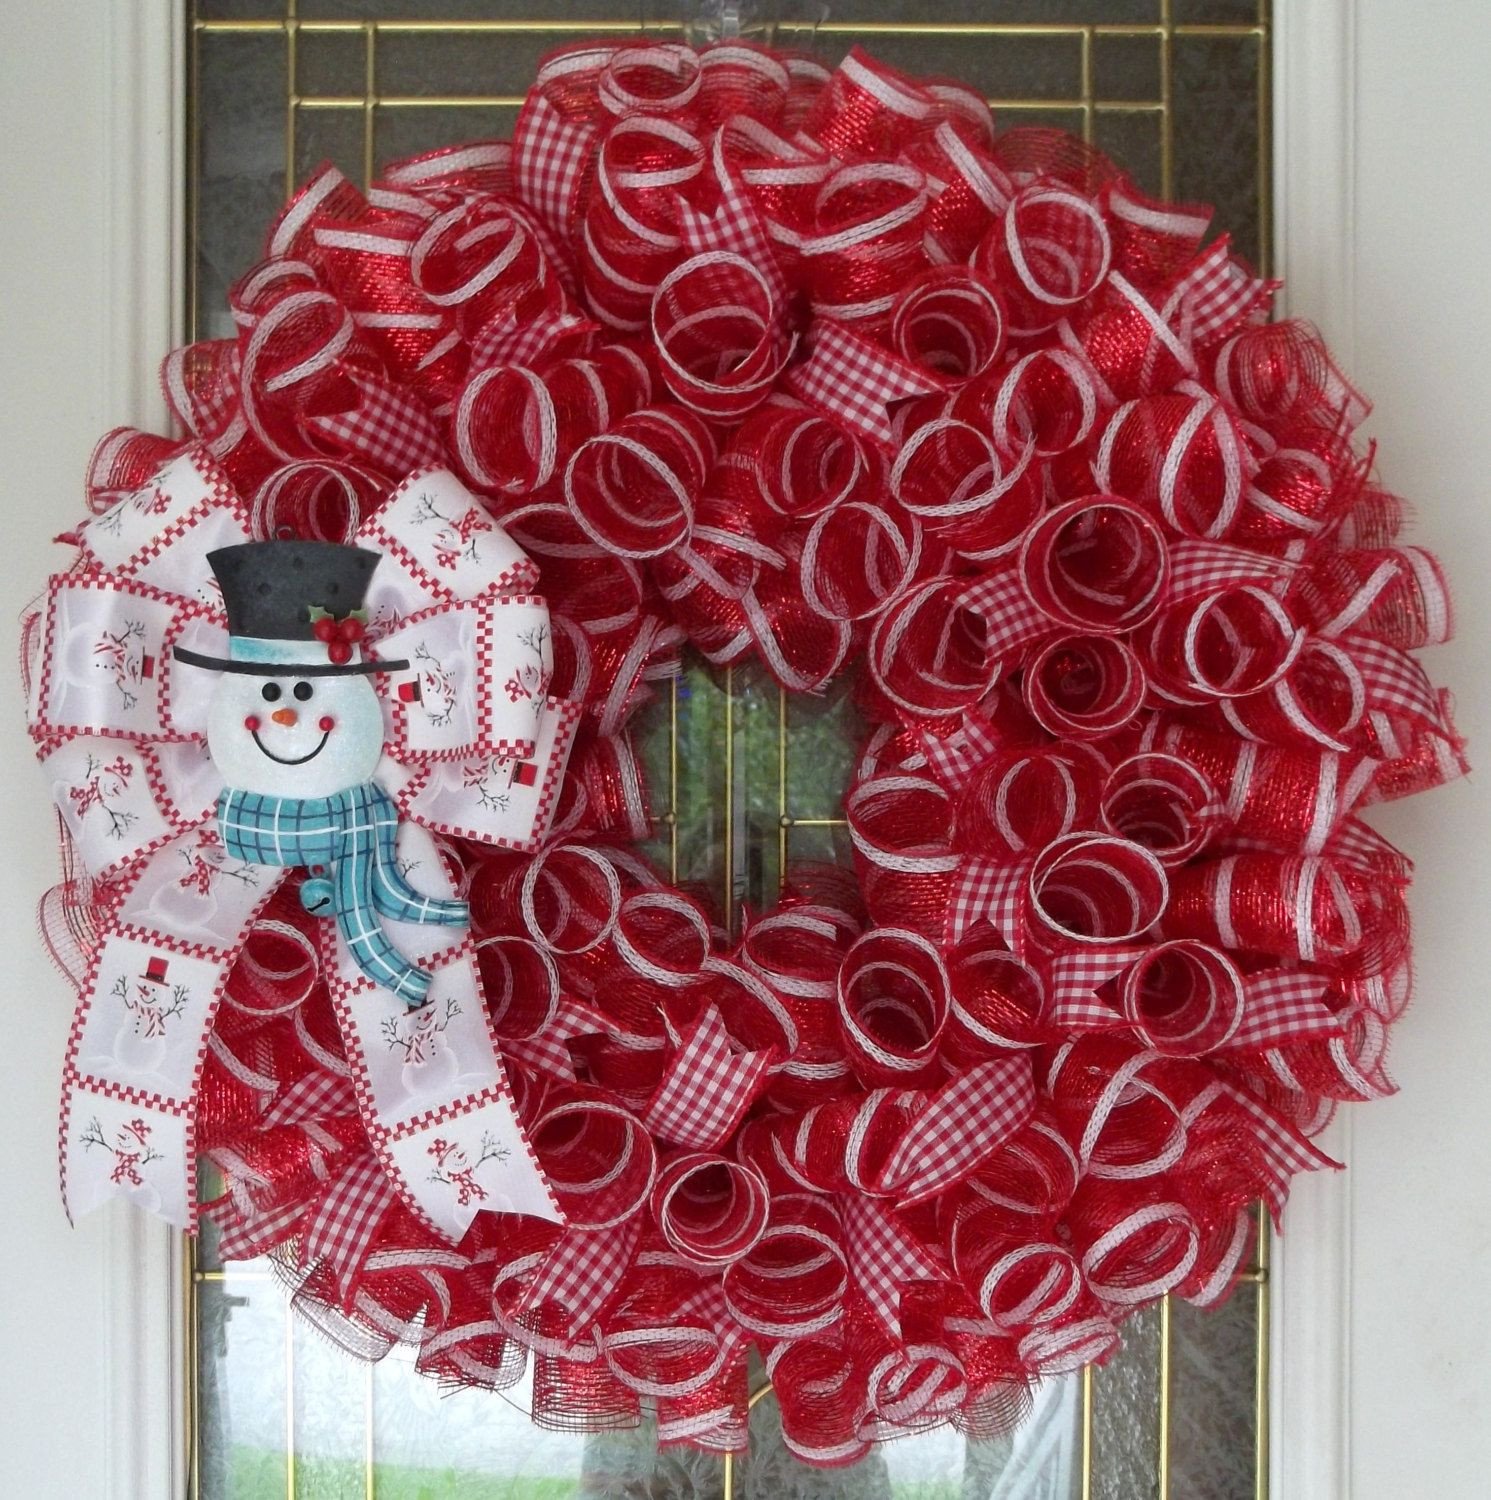 DIY Mesh Christmas Wreath
 Snowman Mesh Wreath Christmas Wreath Winter by